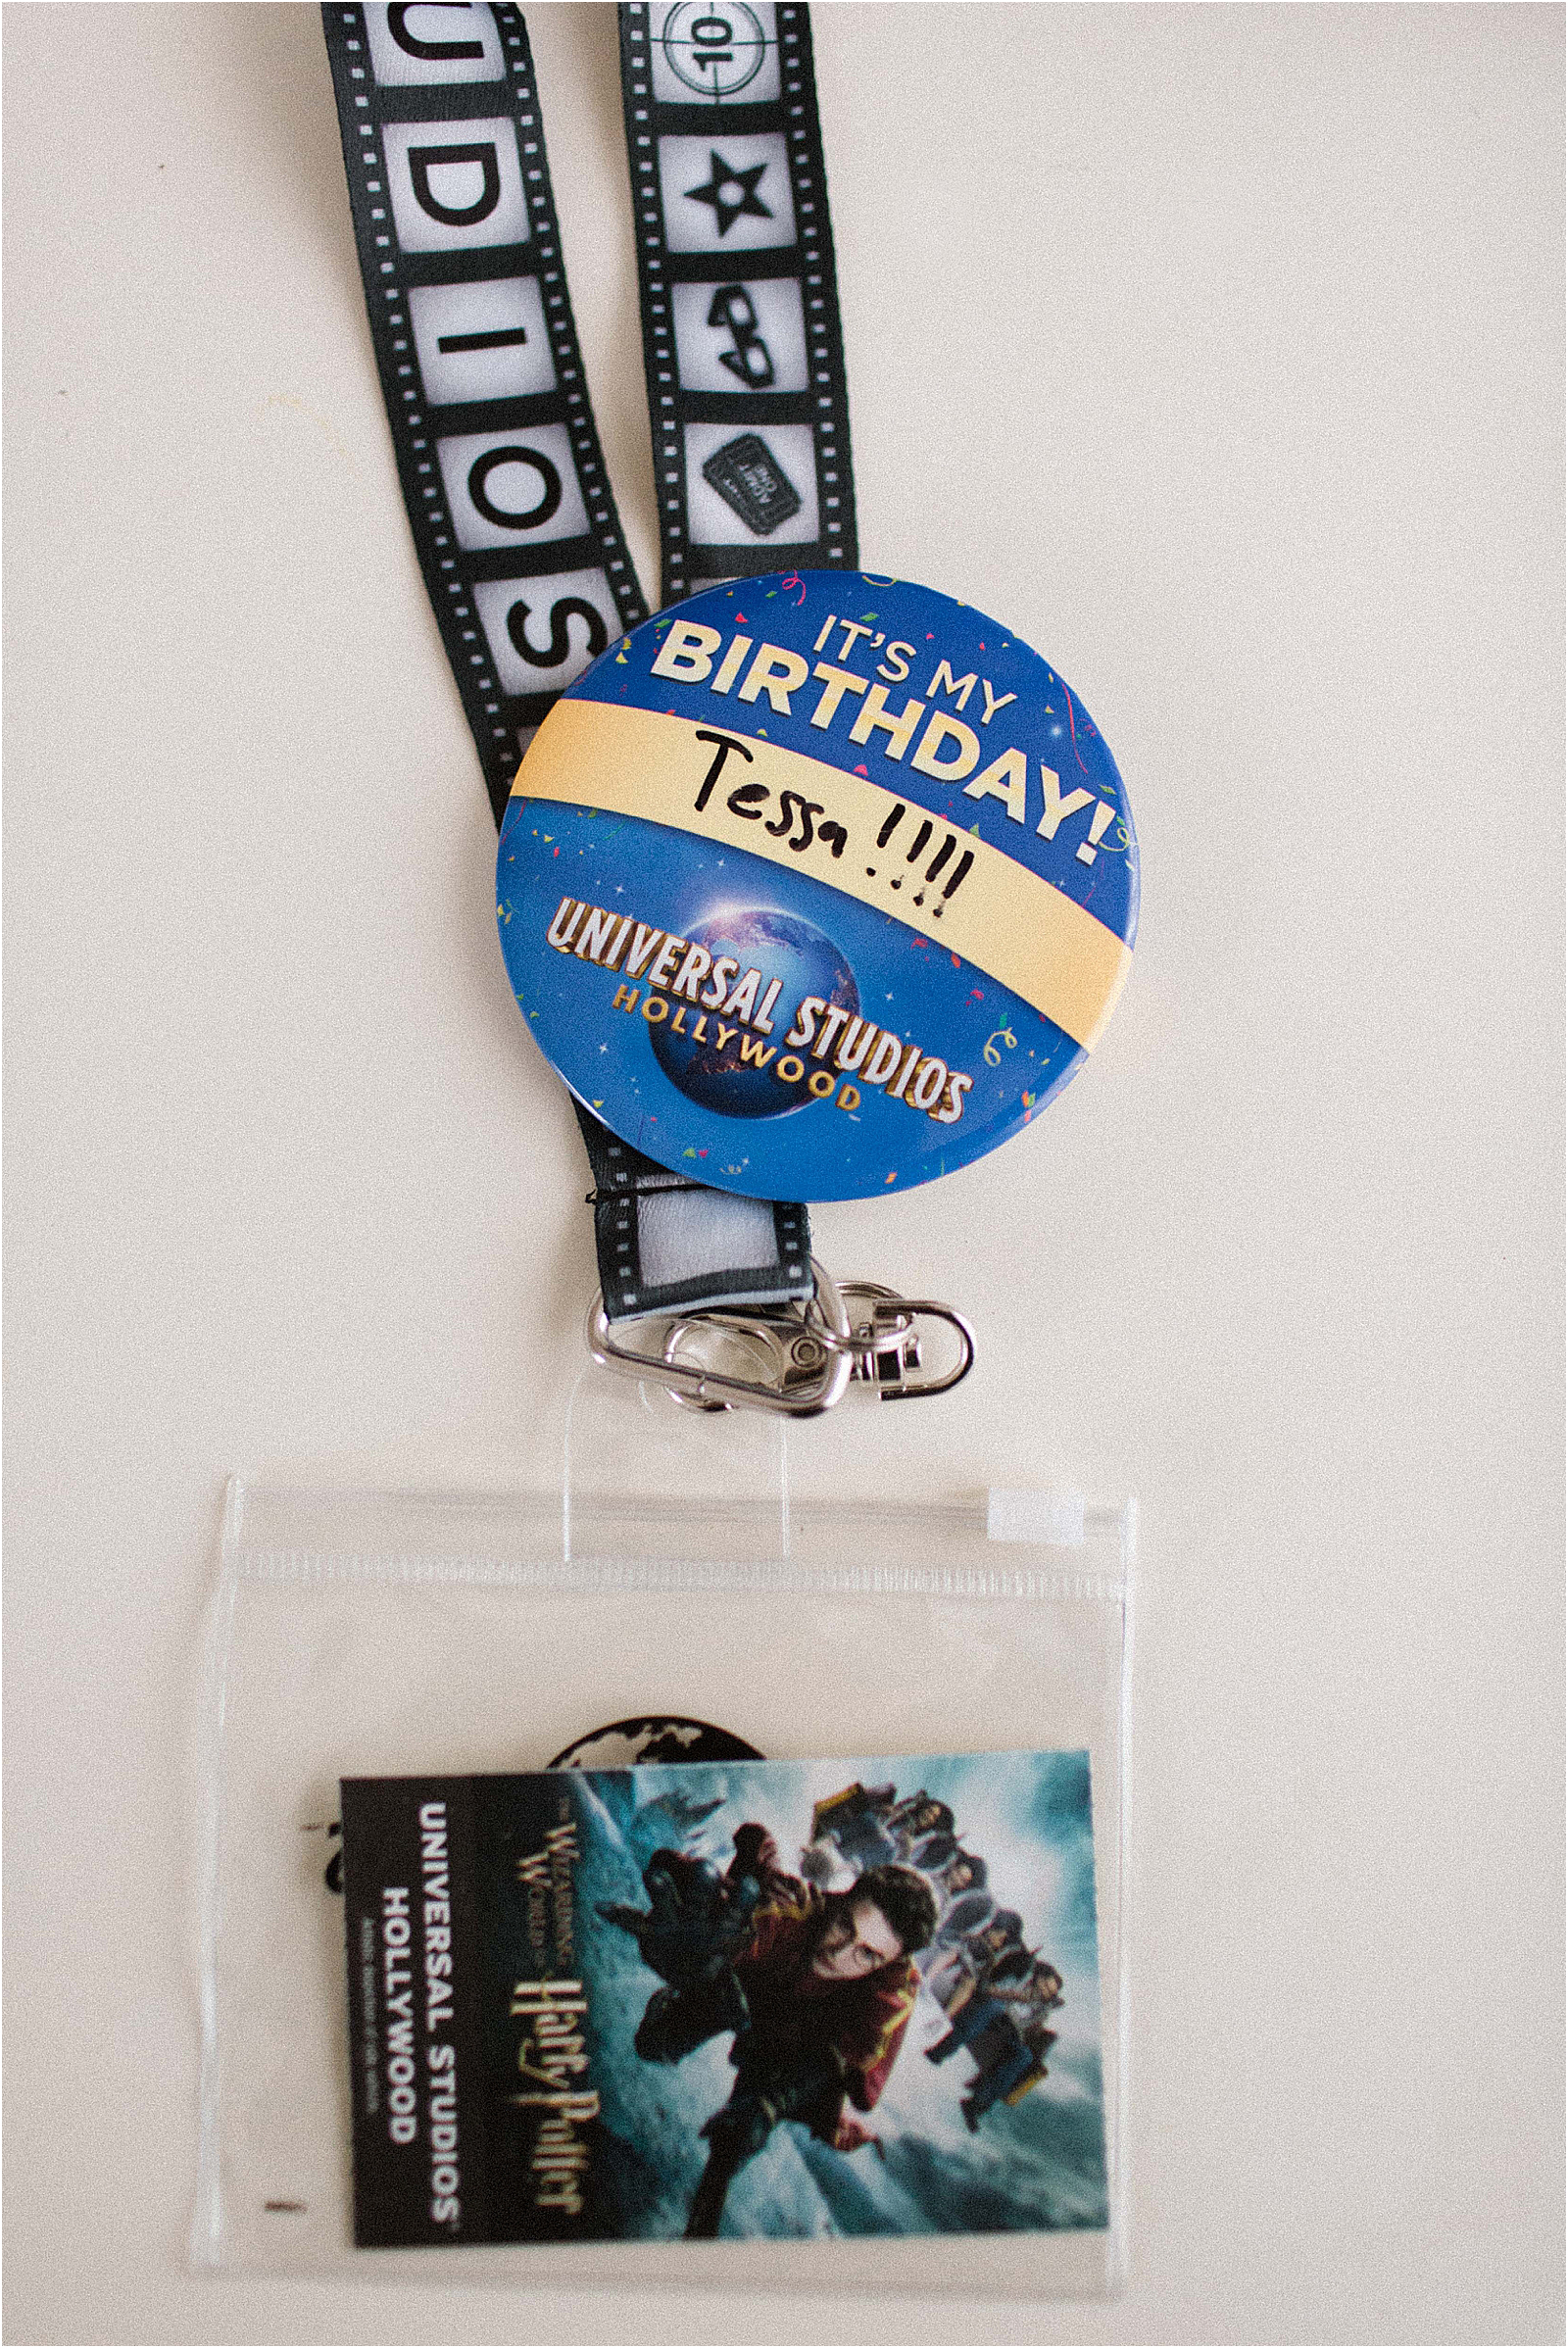 Universal Studios Hollywood birthday button 